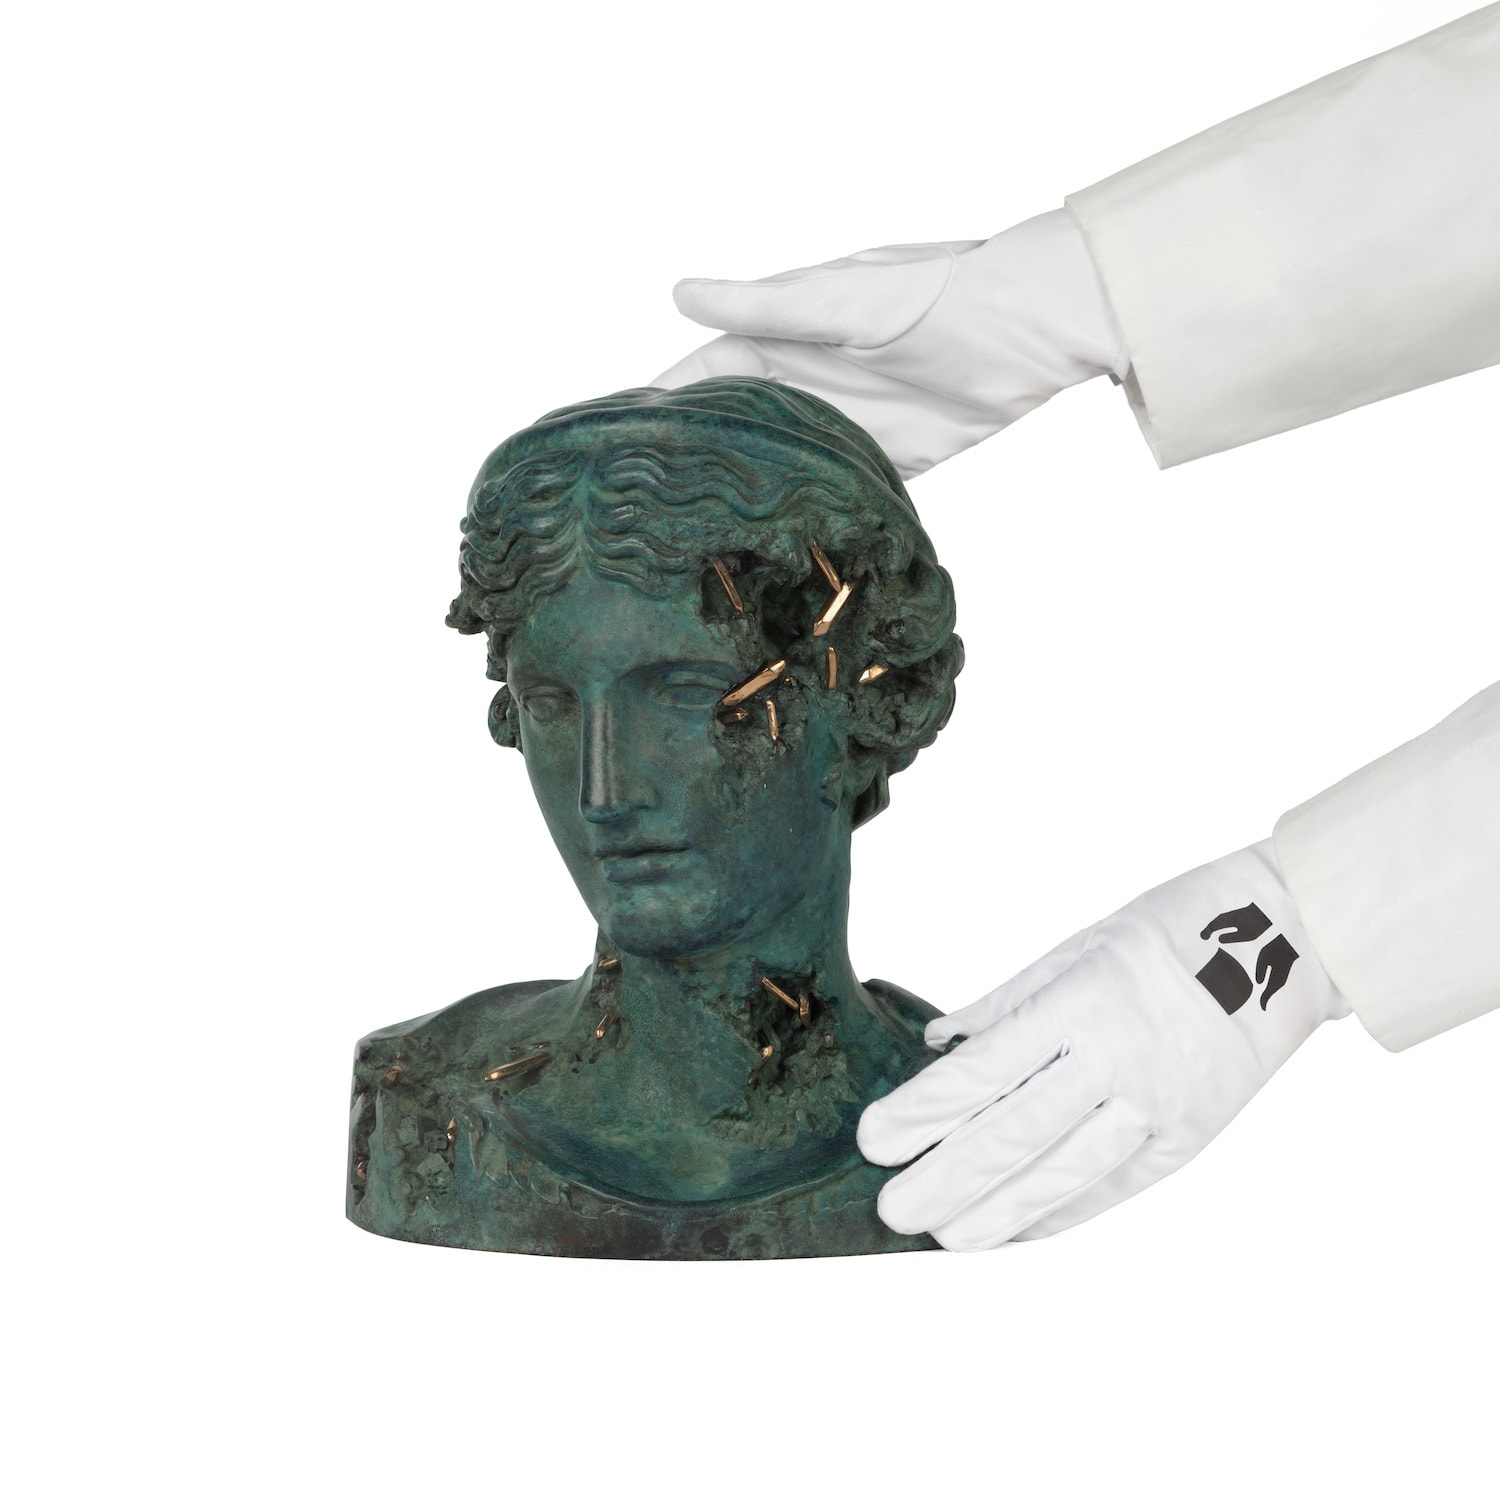 Archive Editions 携手 Arsham Studio 发售限量青铜雕塑《被侵蚀的青铜墨尔波墨涅》